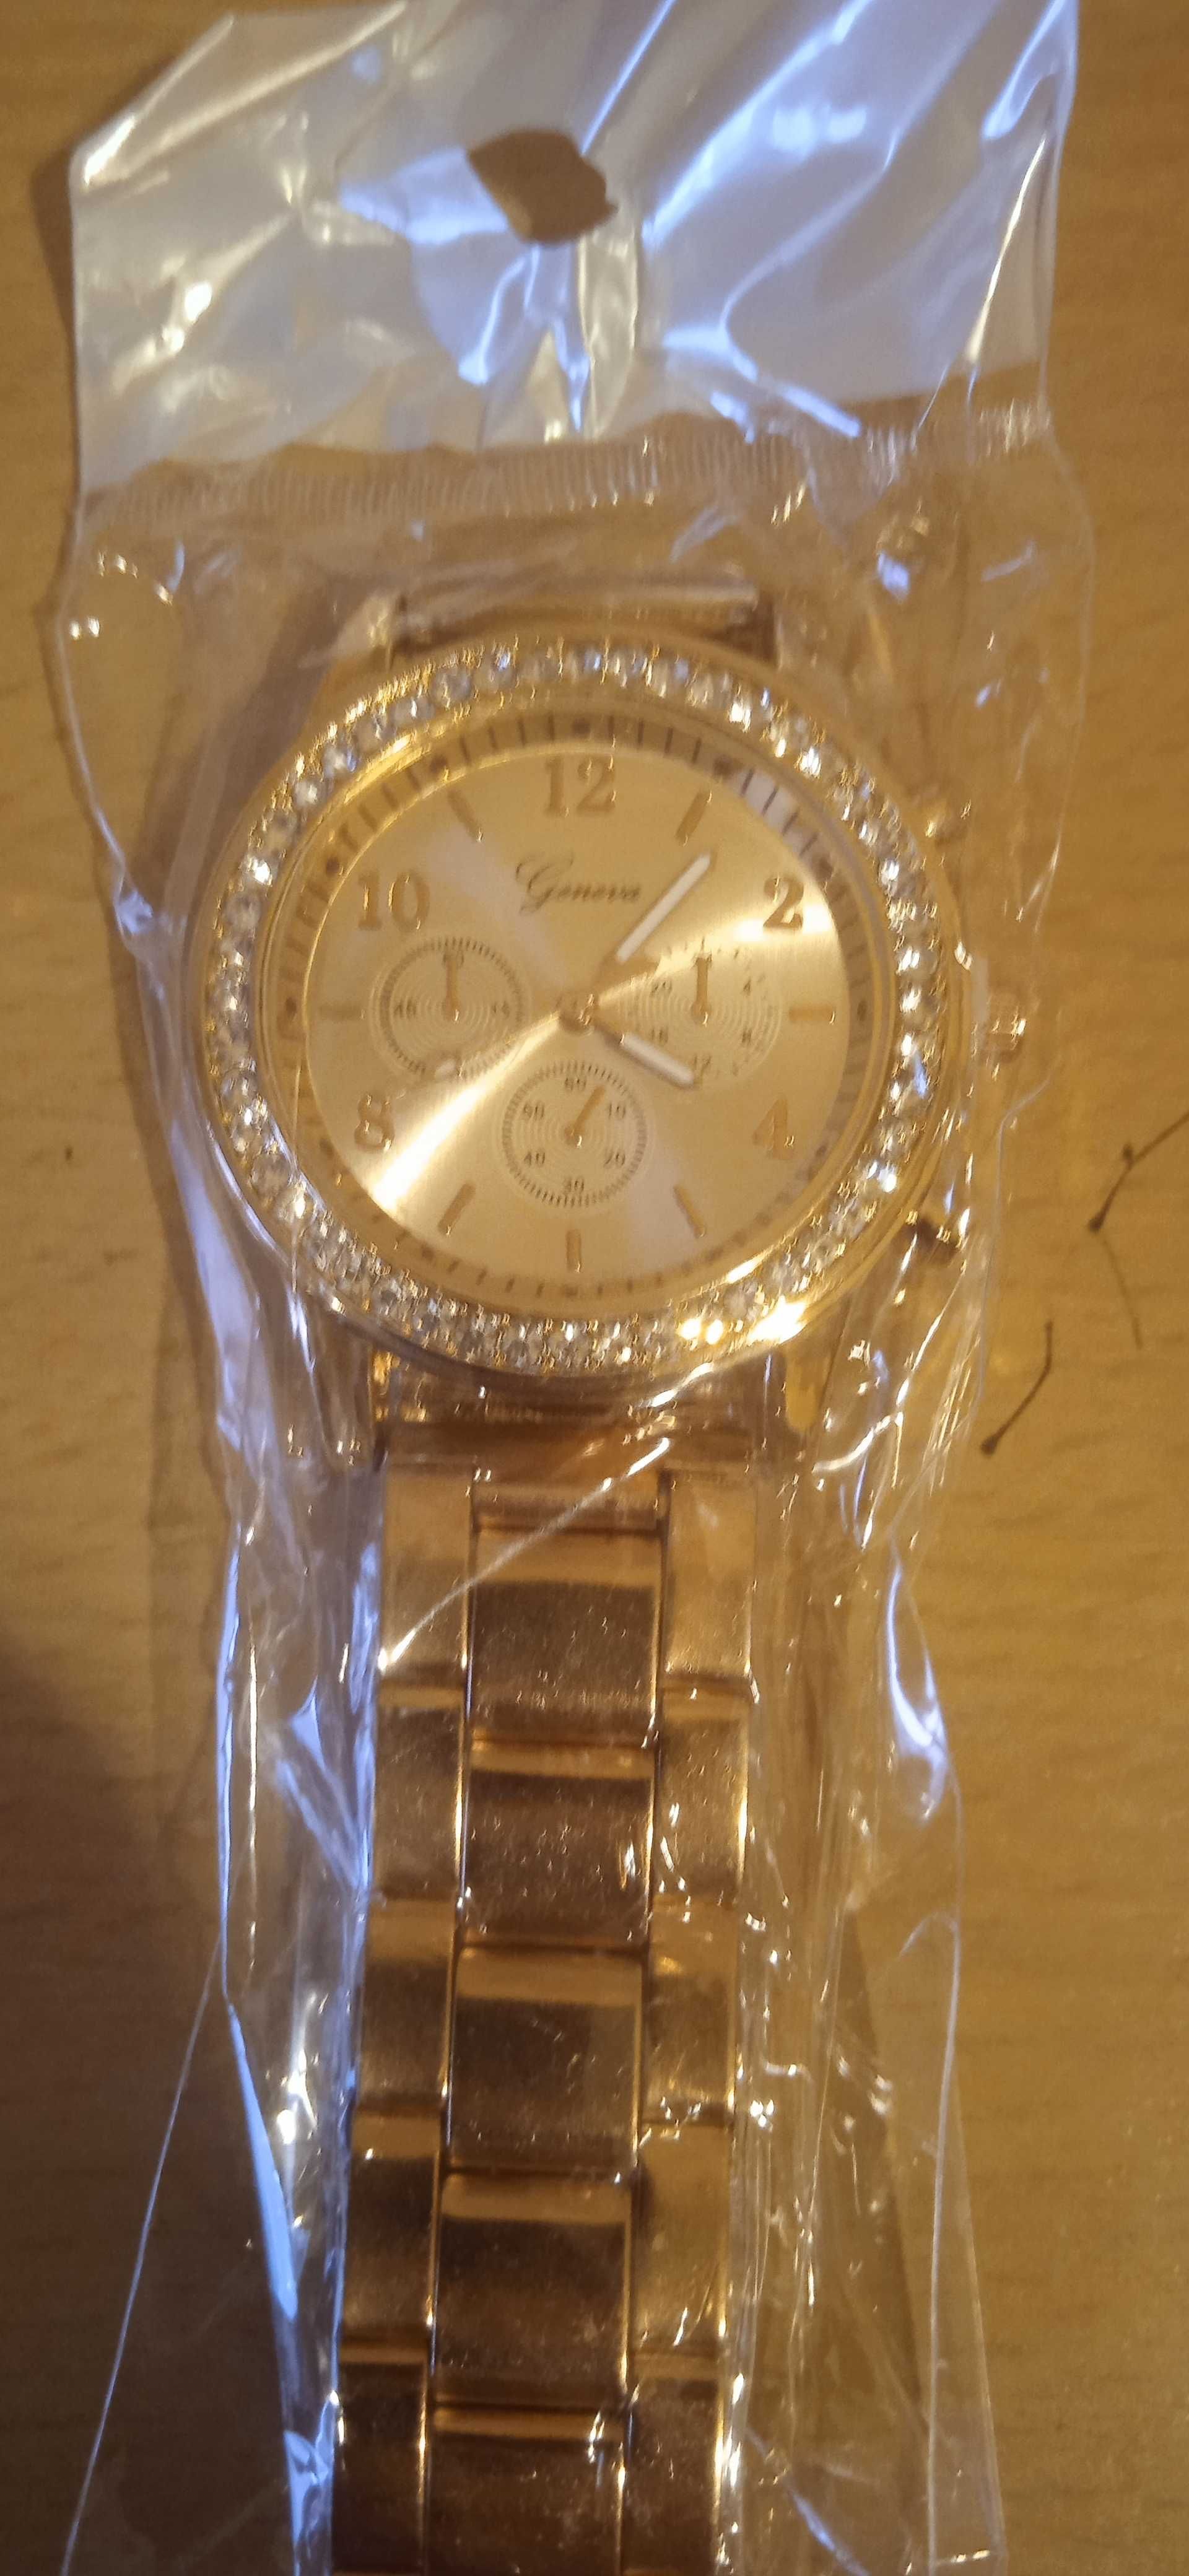 Damski zegarek z kryształkami